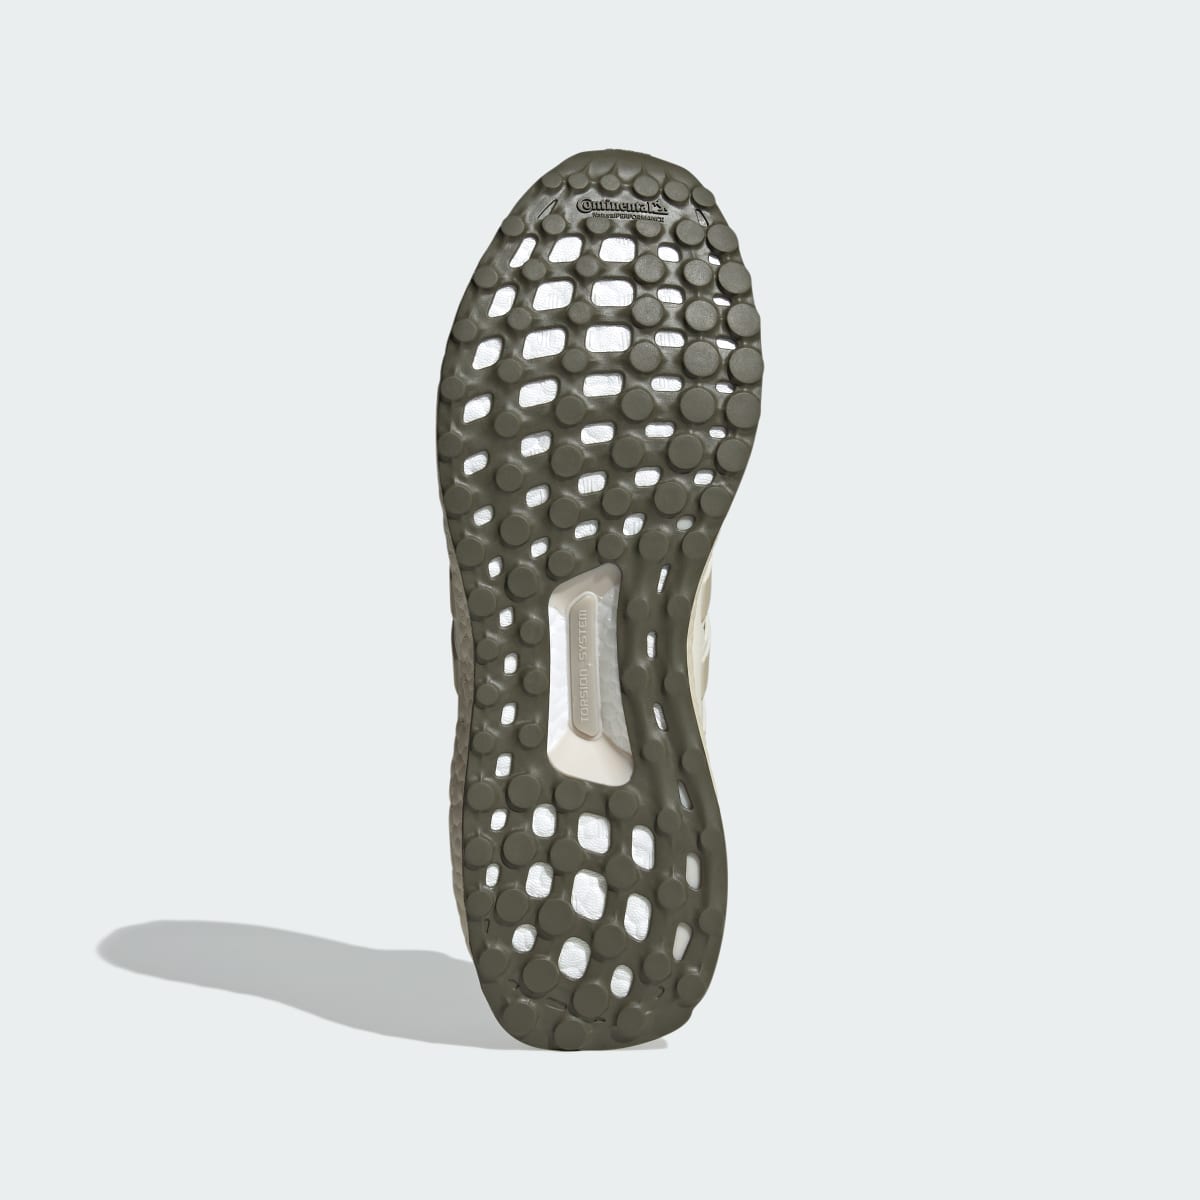 Adidas Ultraboost 1.0 Schuh. 4